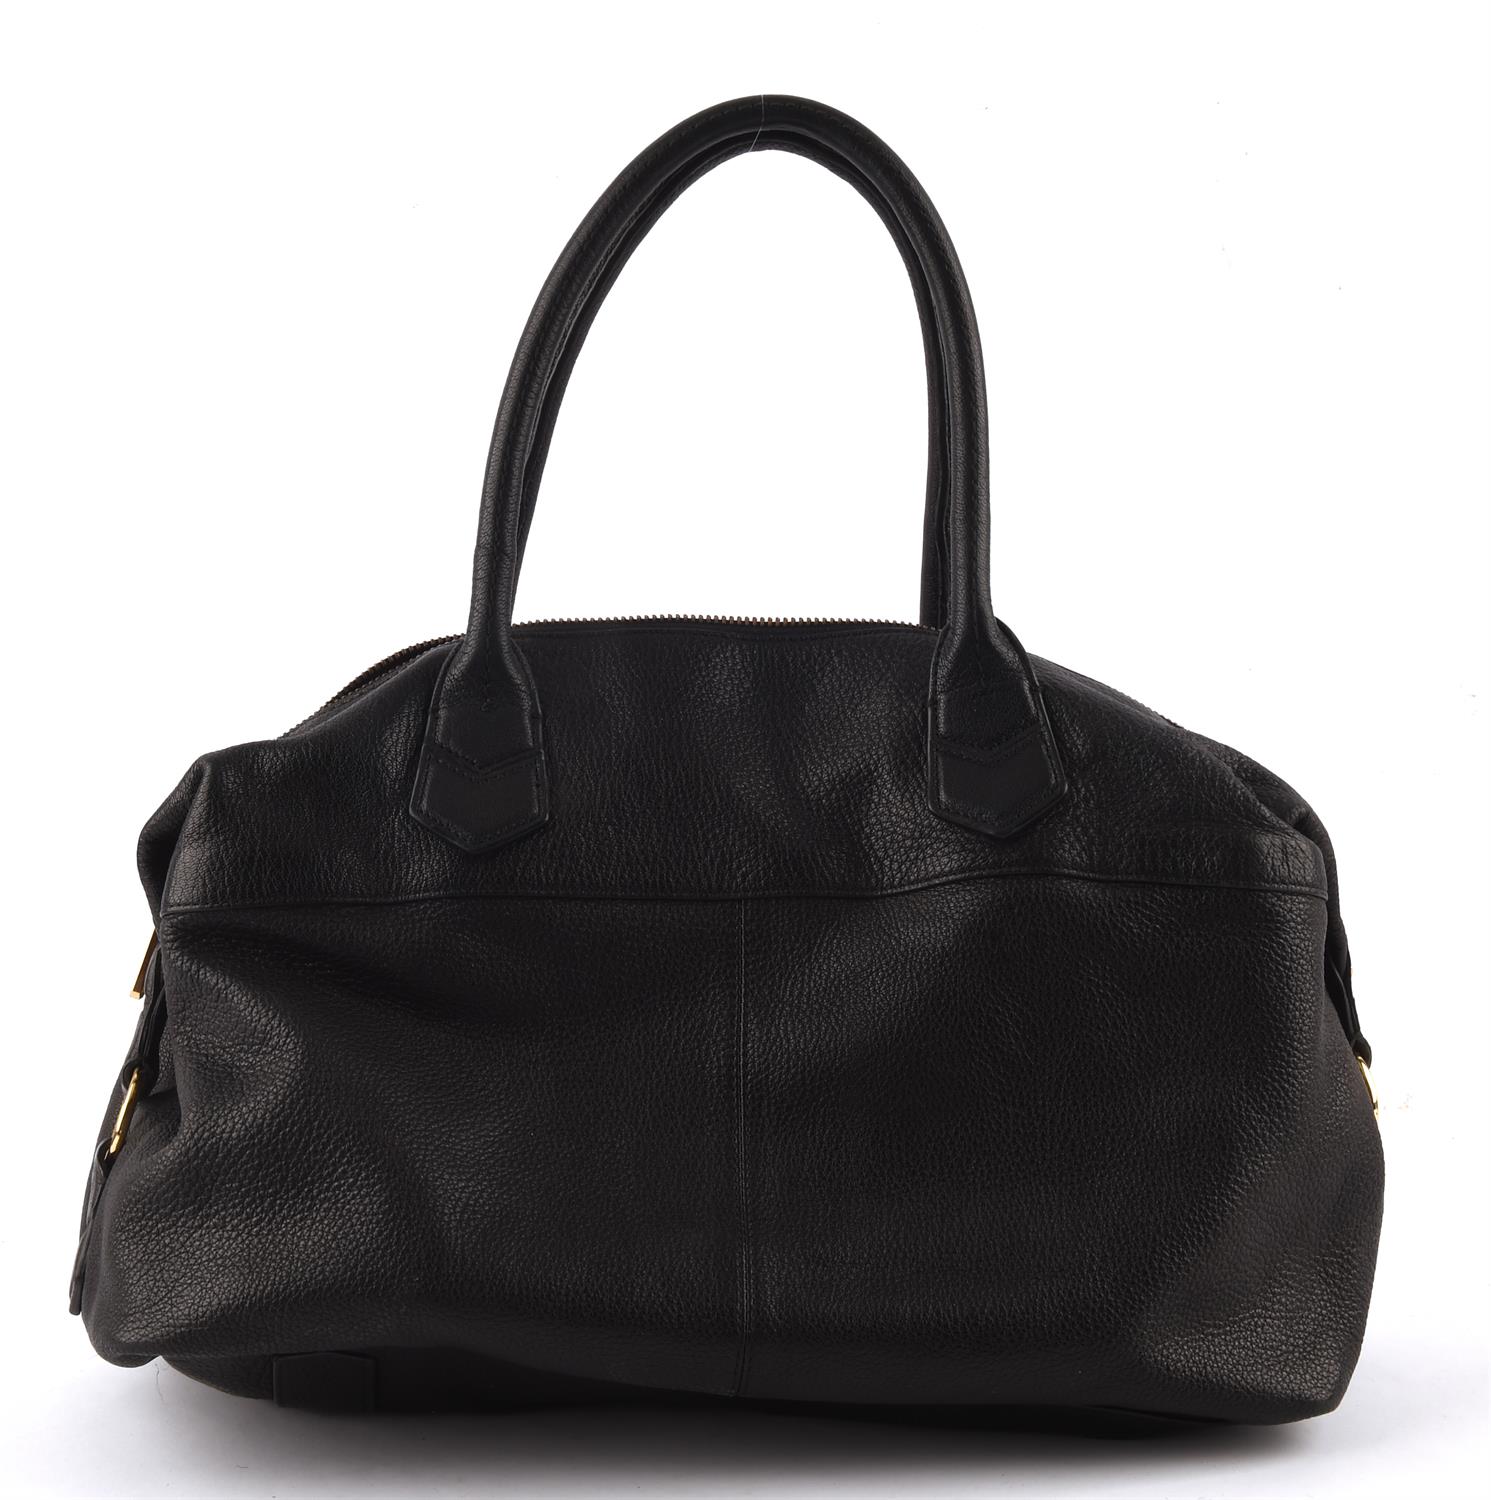 RALPH LAUREN black leather handbag (45cm x 27cm x 13cm) gold coloured hardware